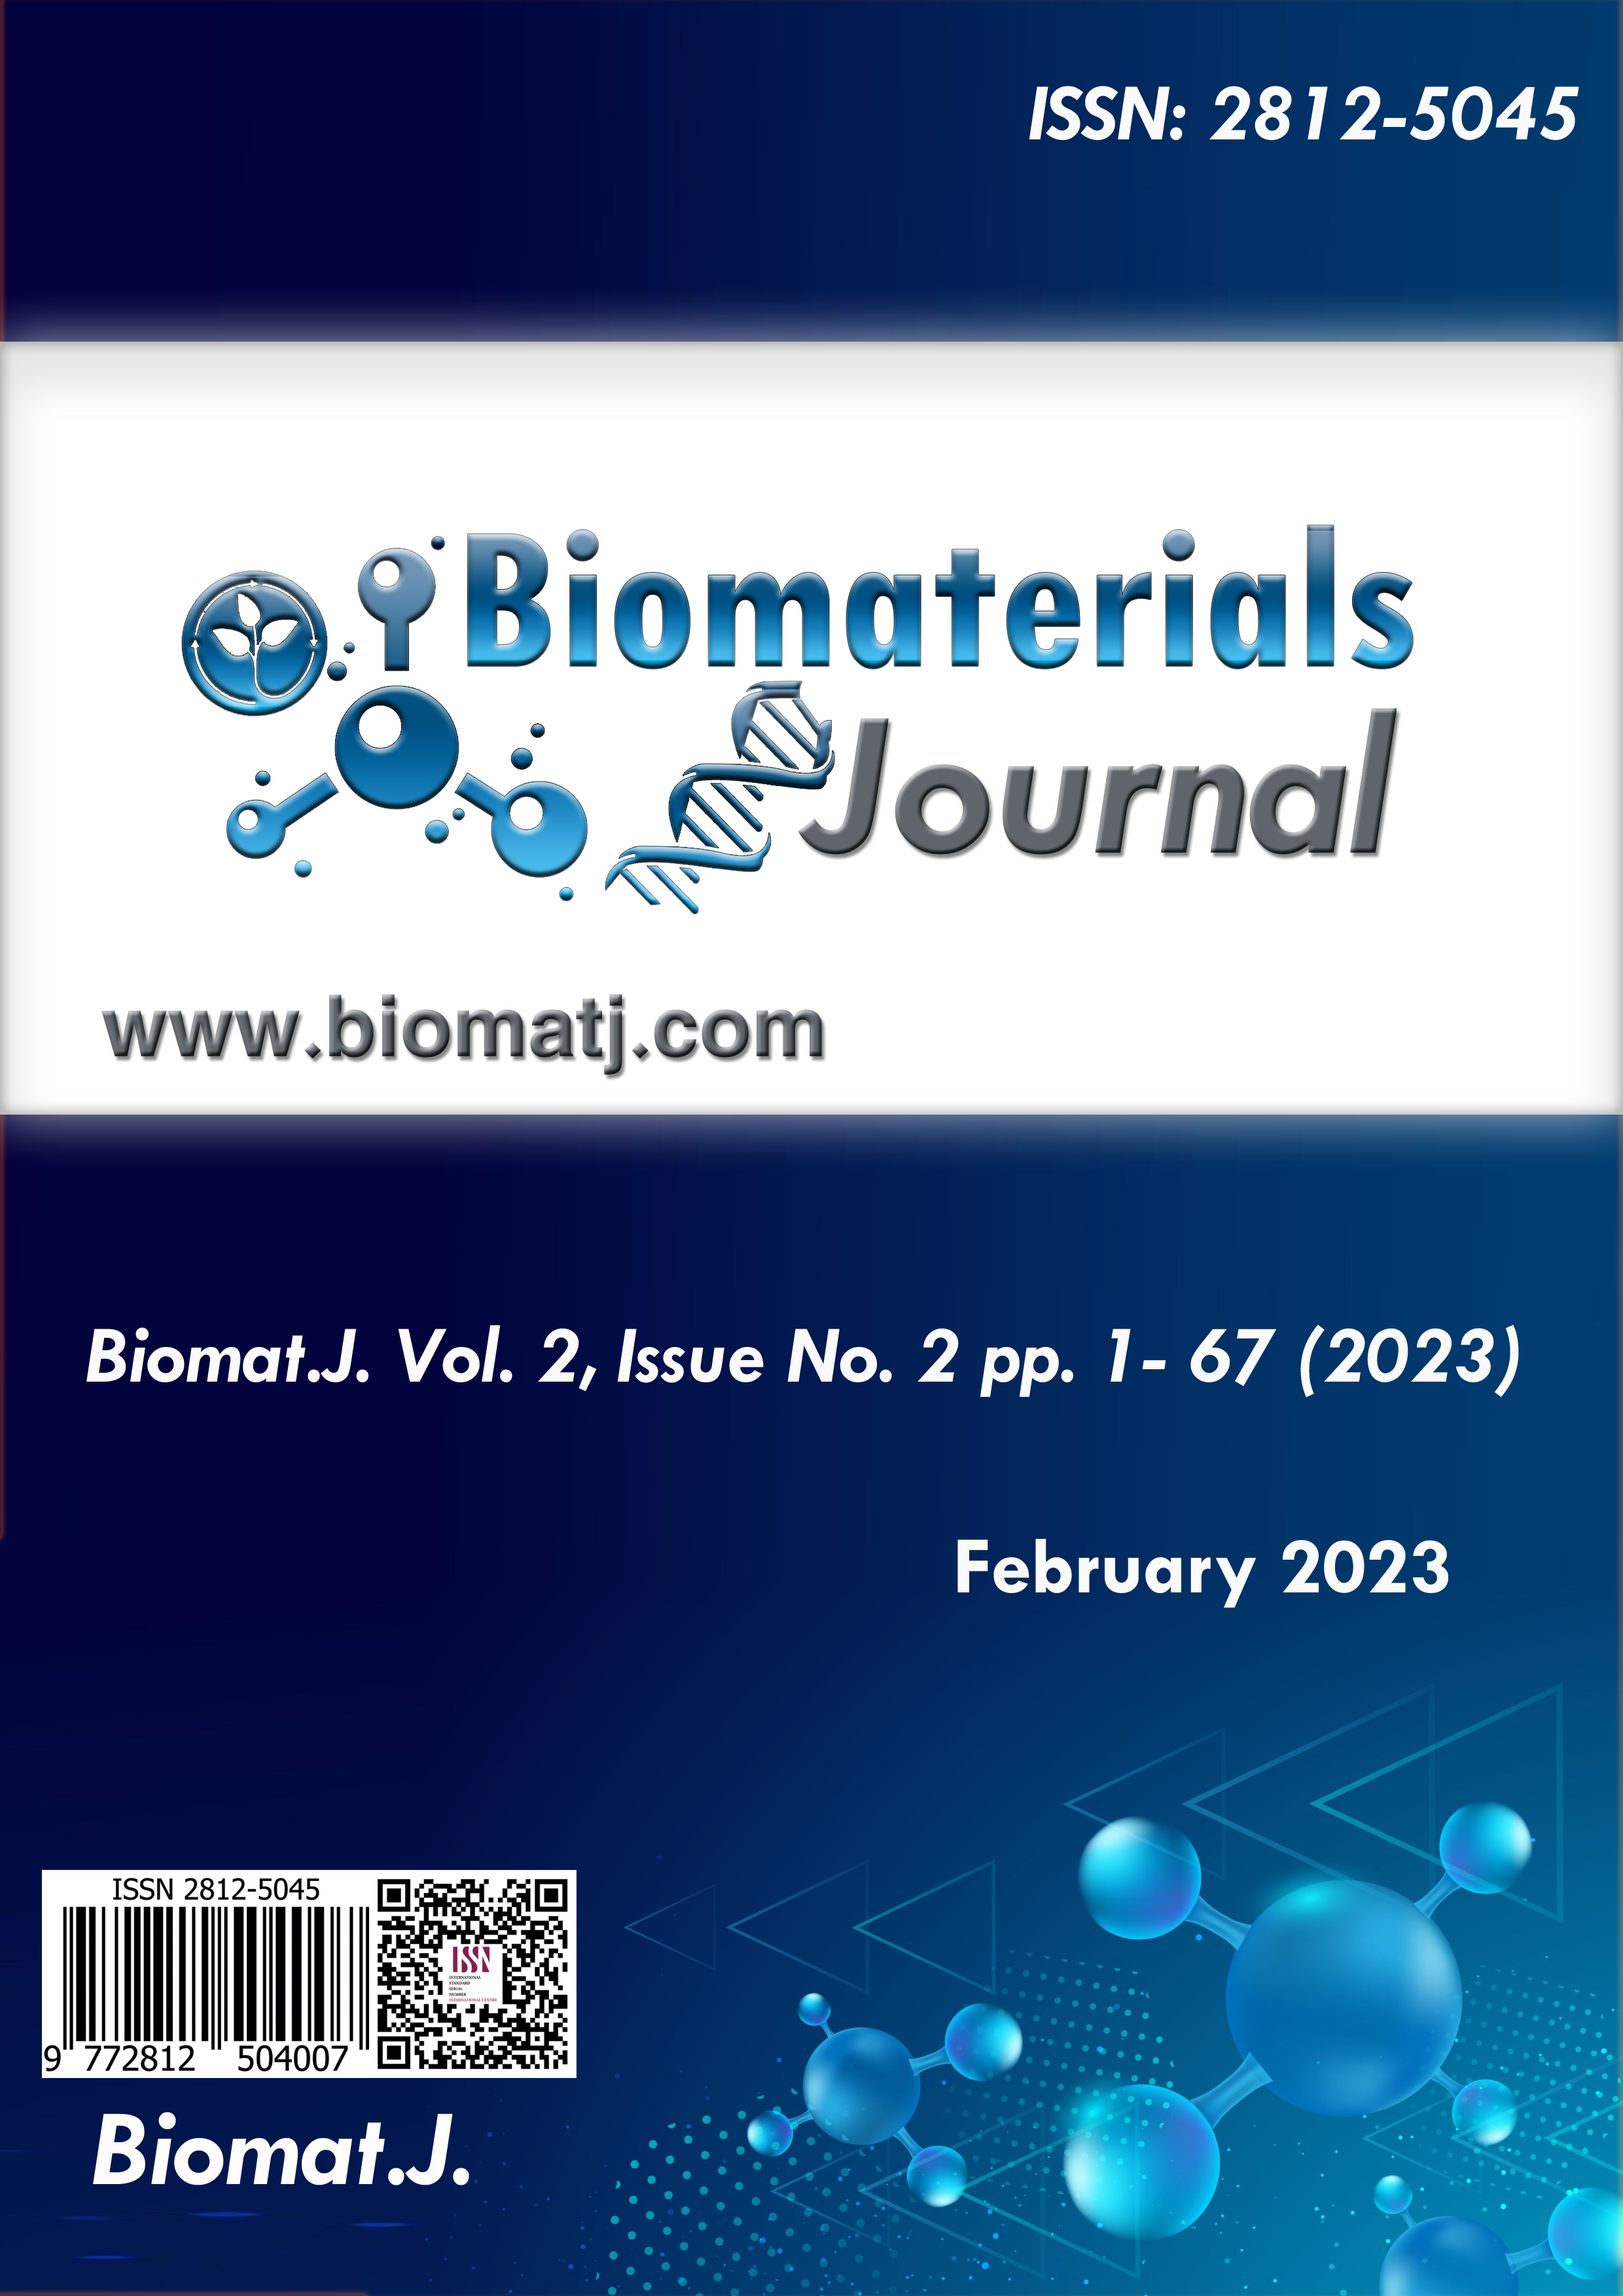 Biomaterials Journal Volume 2, Issue No. 2, February 2023